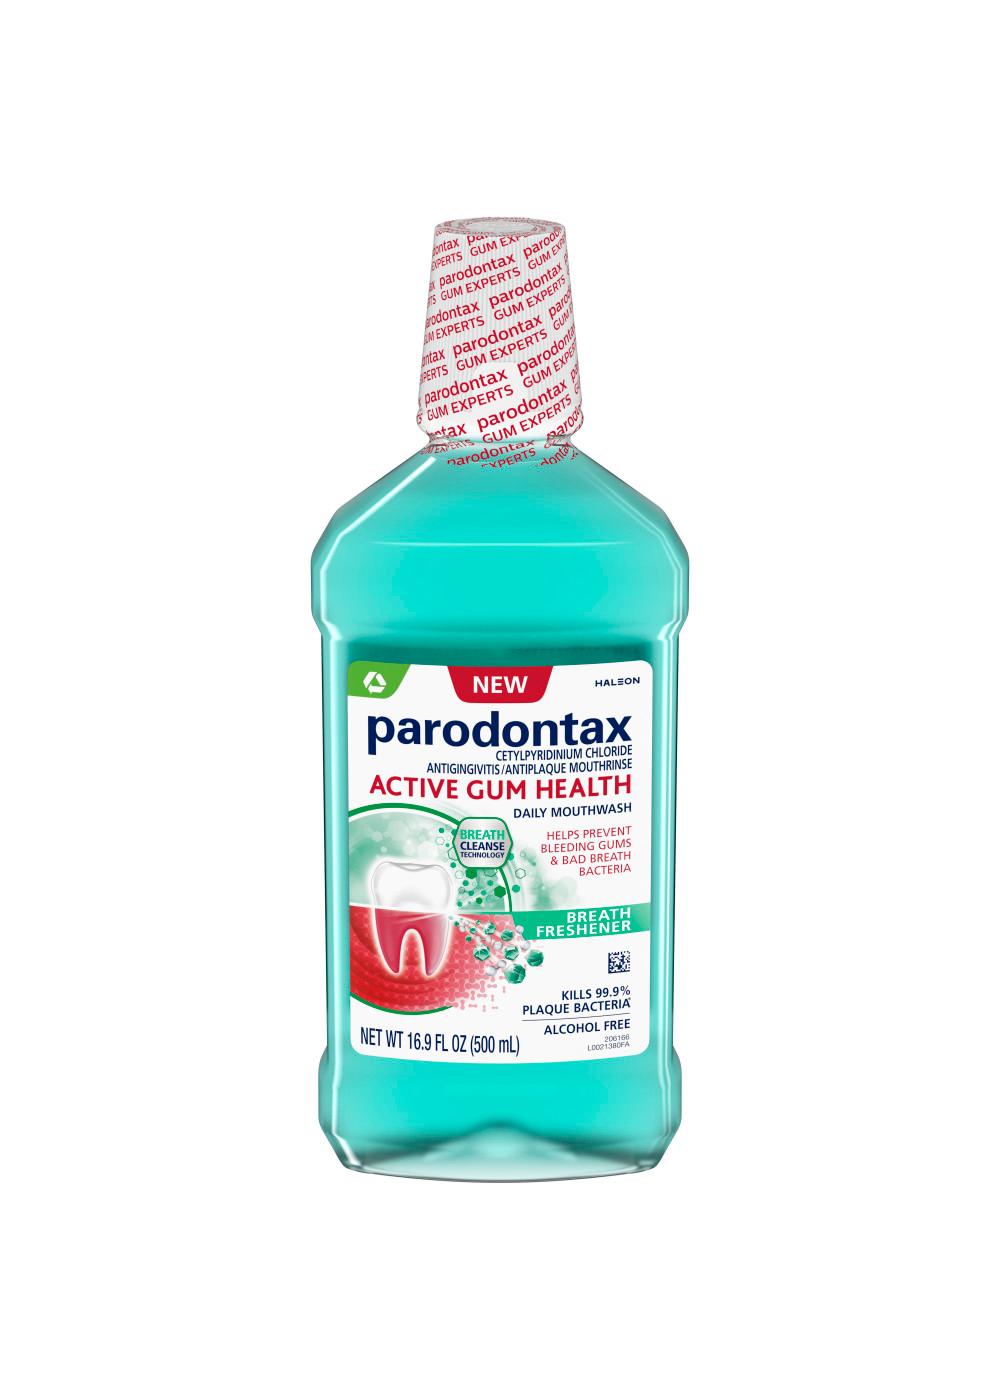 Parodontax Active Gum Health Mouthwash - Fresh Mint; image 1 of 9